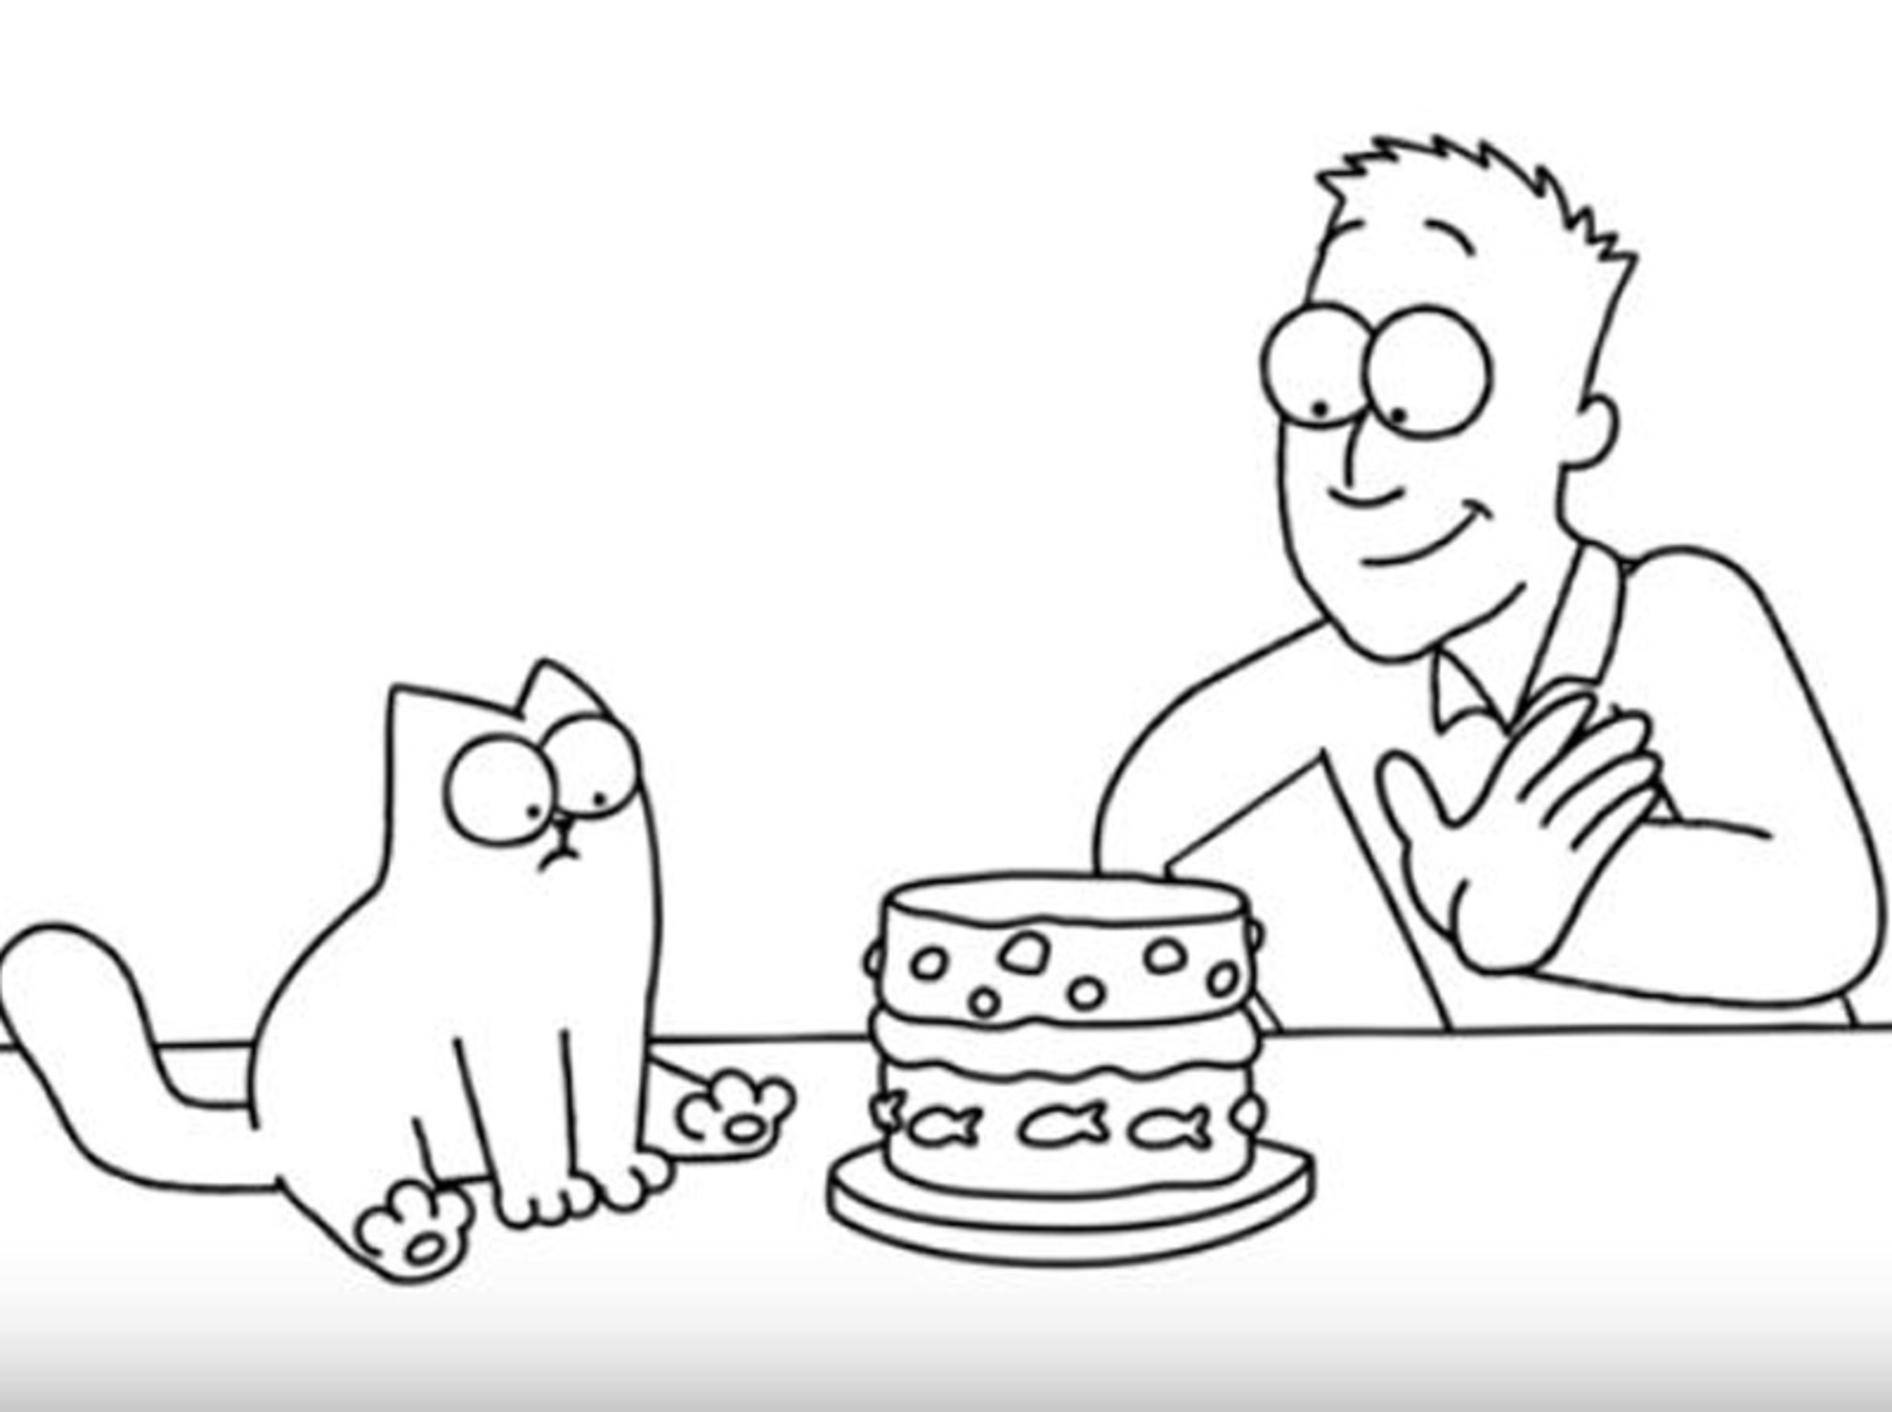 Simon's Cat feiert seinen zehnten Geburtstag - Bild: YouTube / Simon's Cat